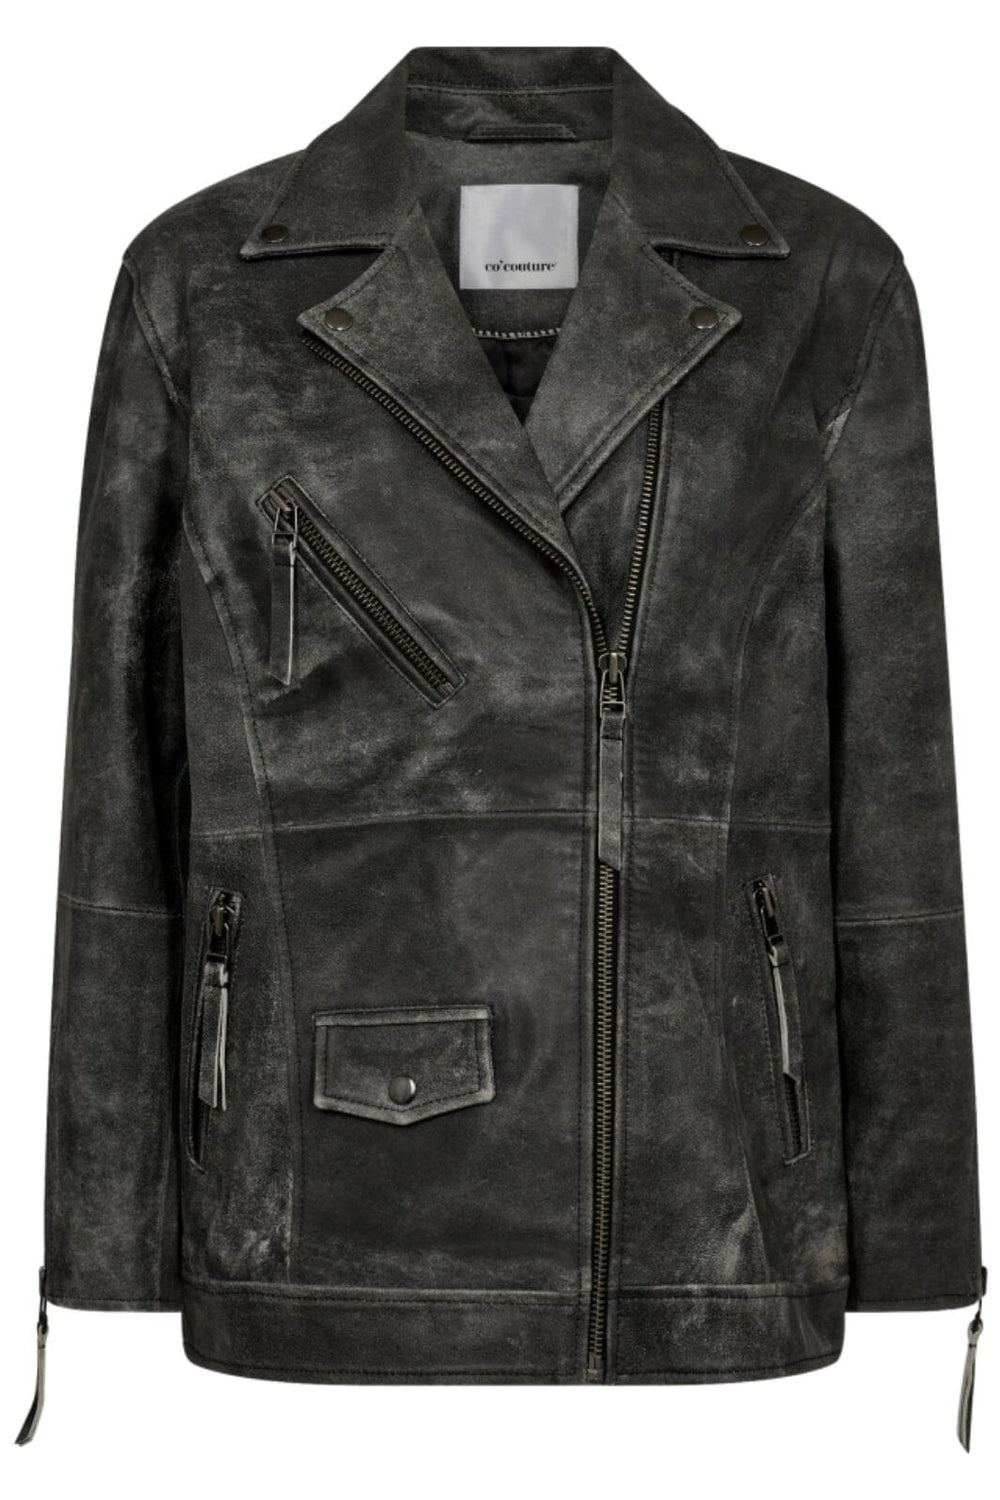 Co´couture - Floydcc Leather Biker Jacket 30201 - 139 Mid Grey Jakker 